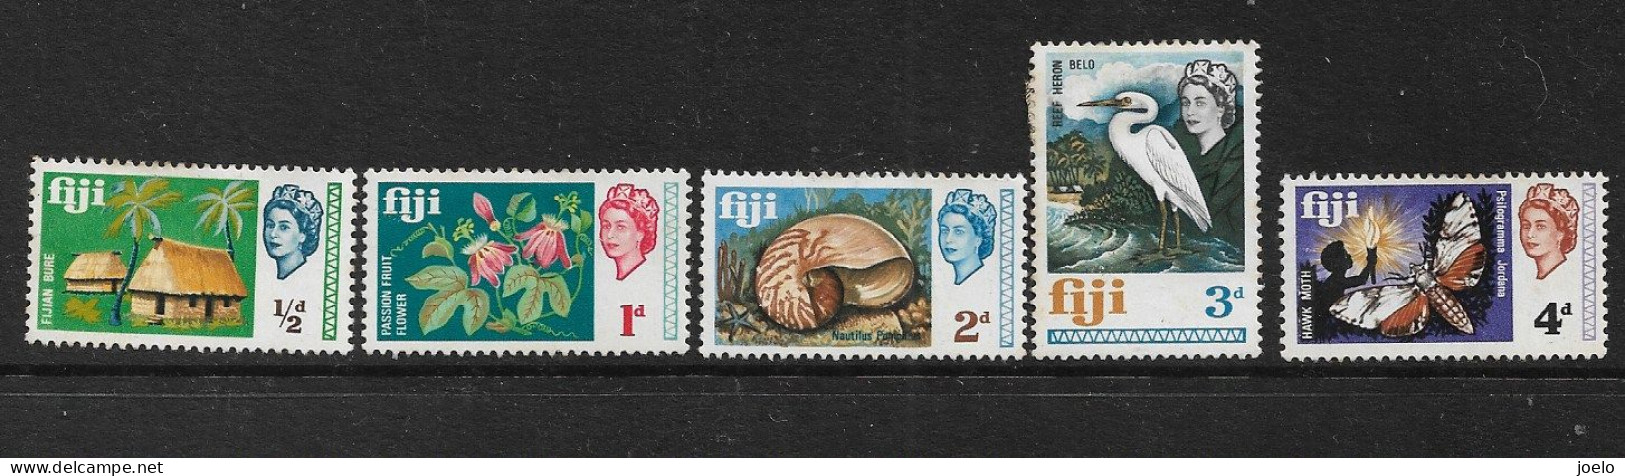 FIJI 1968 QE Ll DEFINITIVES SMALL MH SELECTION - Fiji (...-1970)